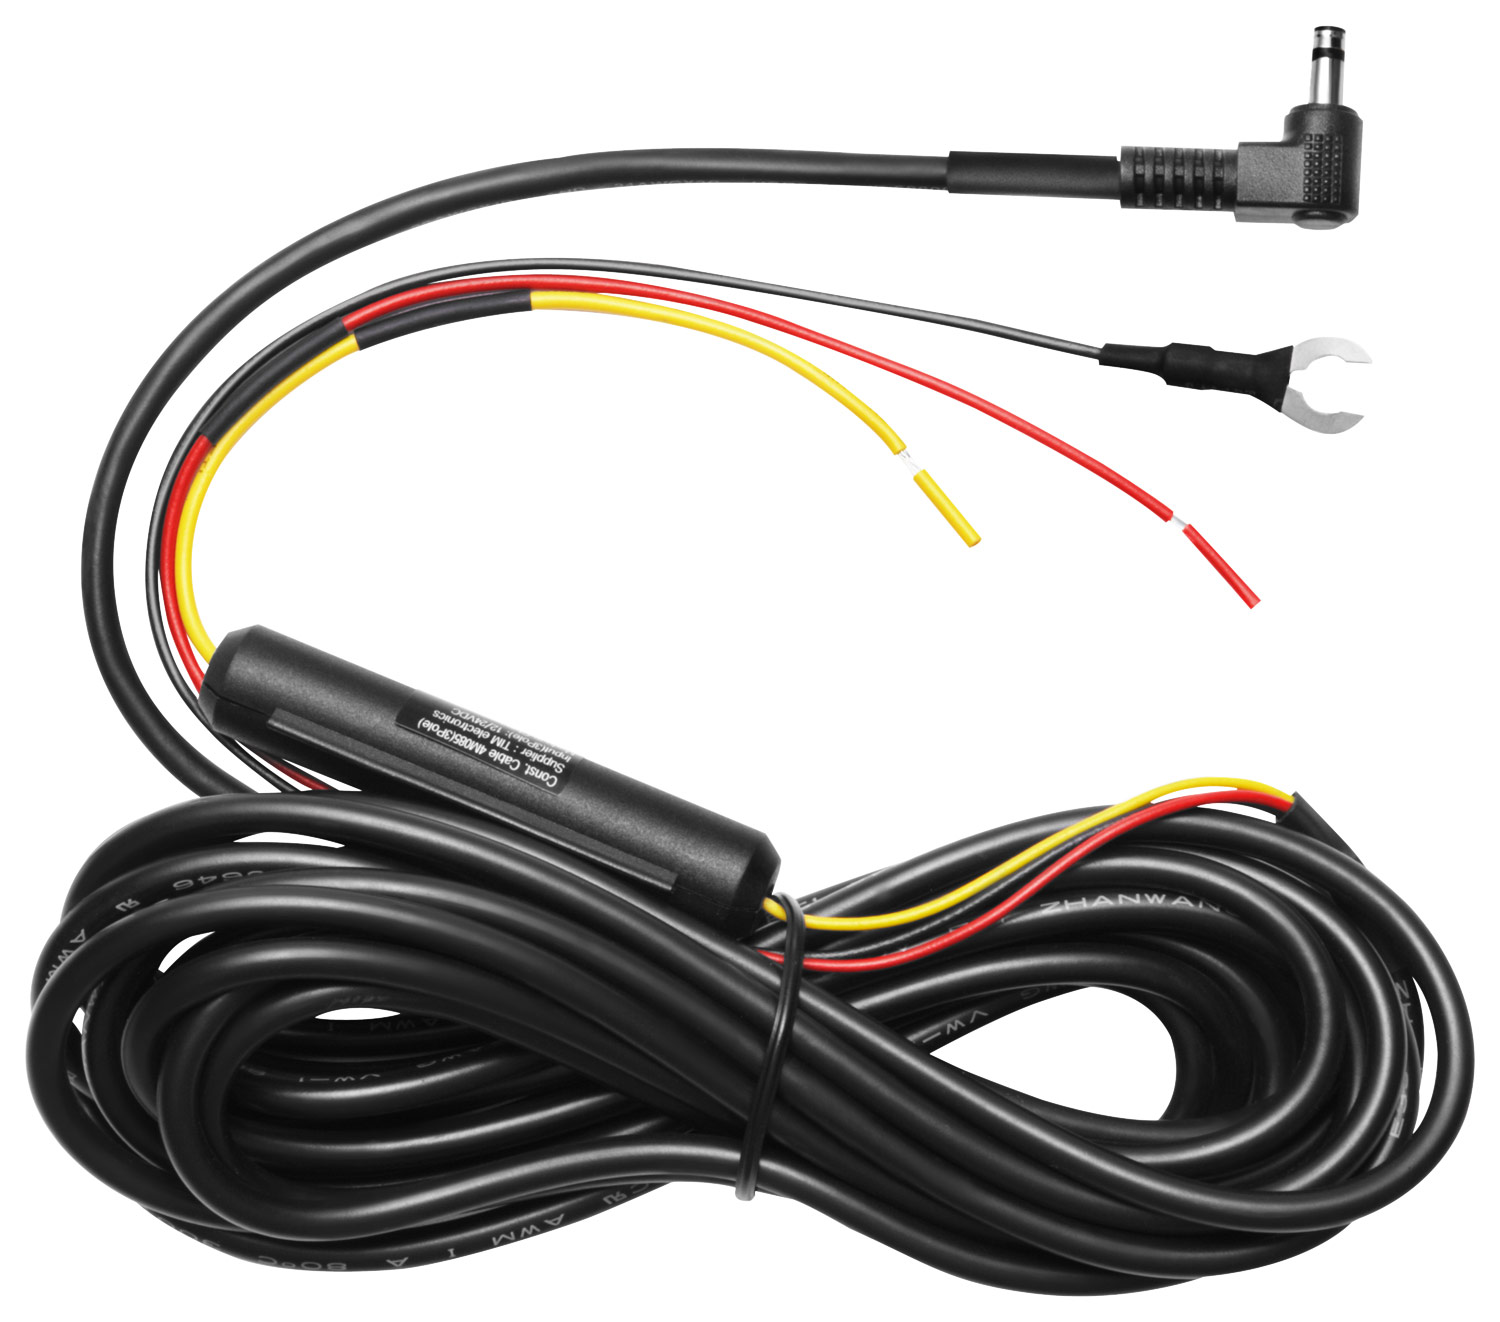 ssontong Dash Cam Hardwire Kit, Universal Hard Wire Kit for Dash